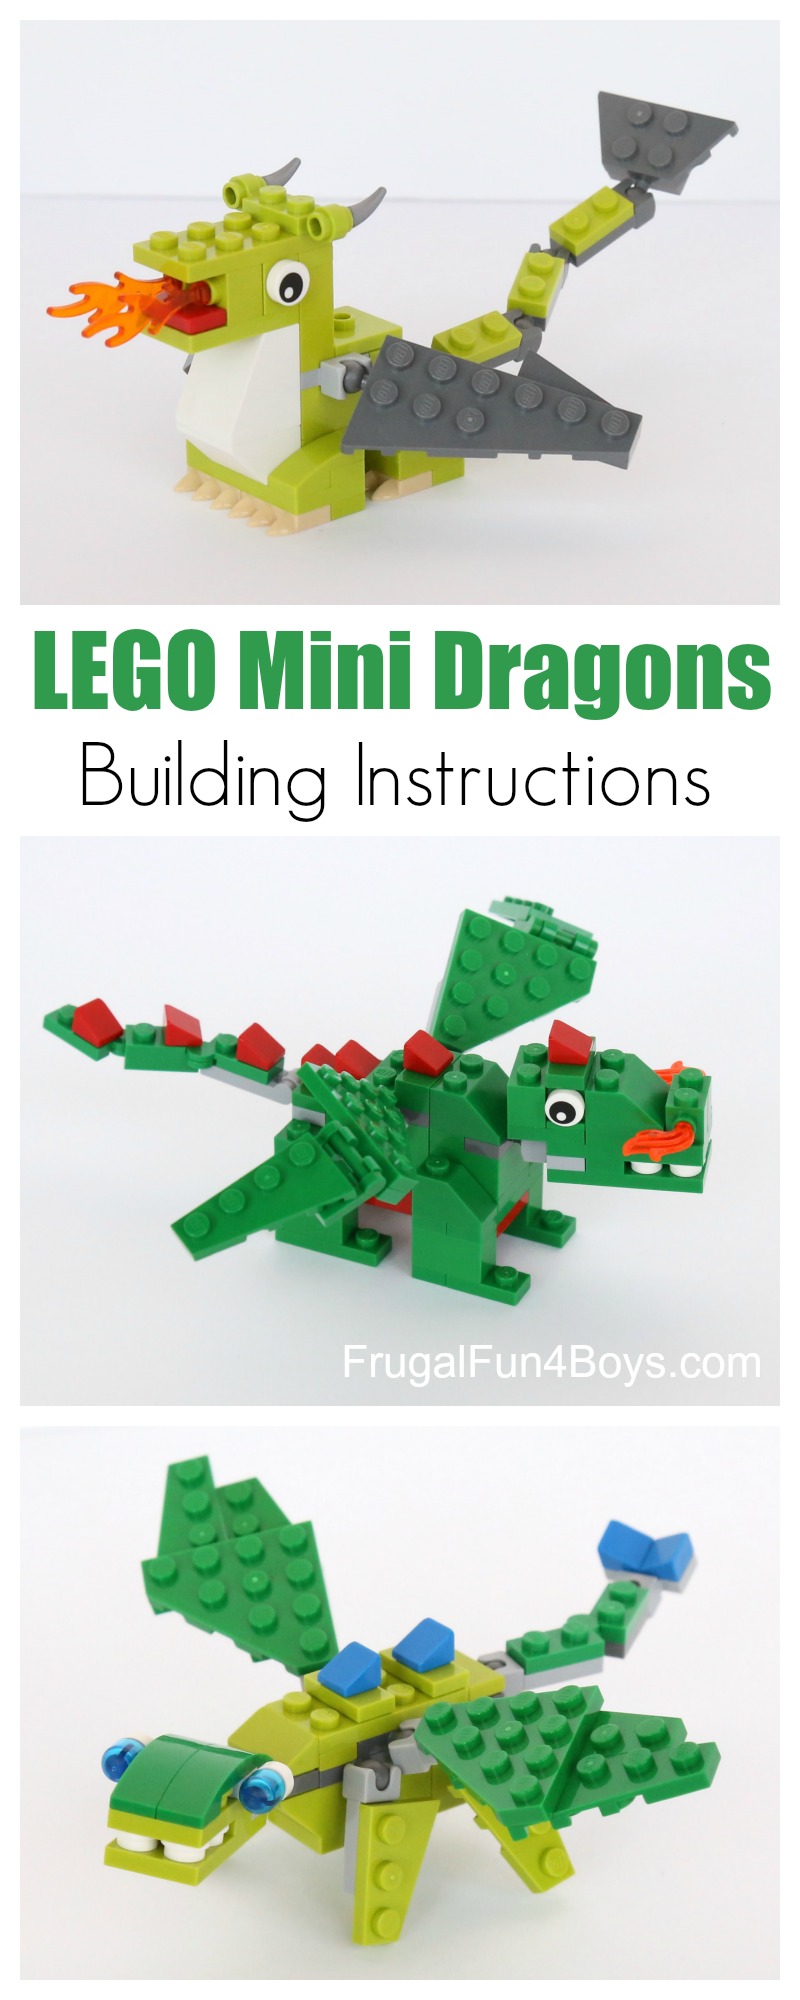 LEGO Mini Dragons Building Instructions